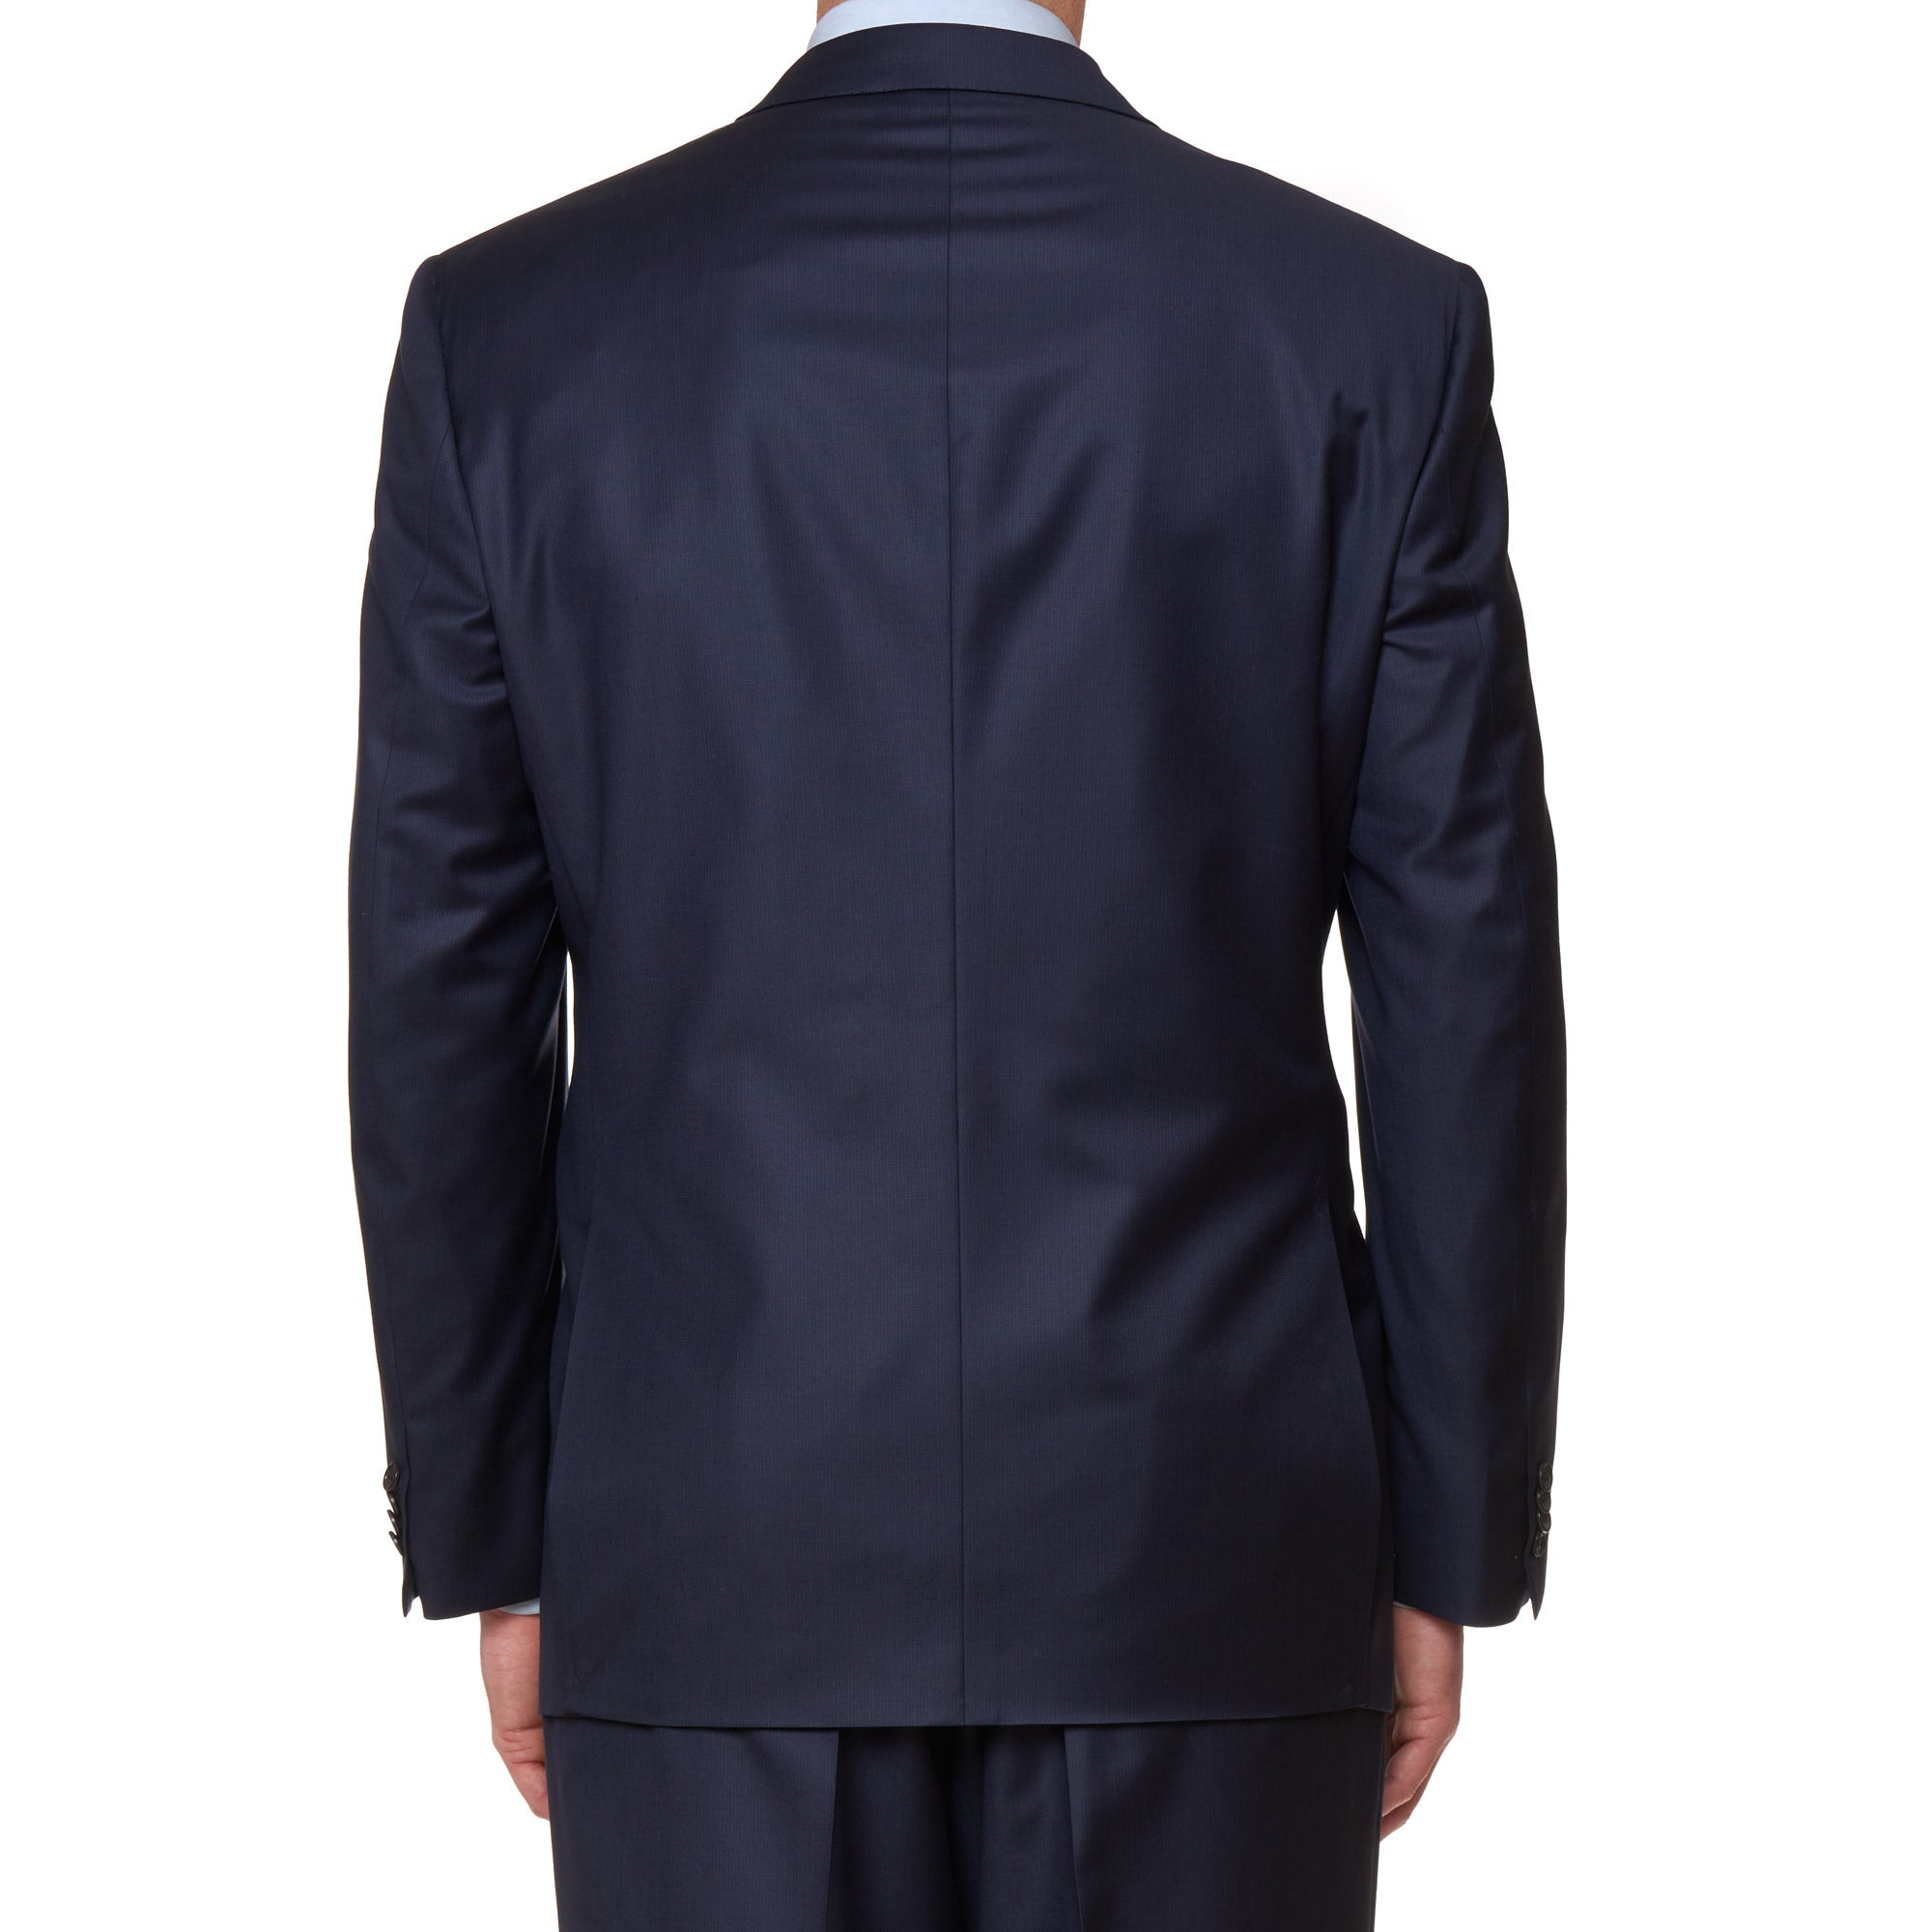 BRIONI "CHIGI" Handmade Blue Wool Super 150's Suit US 48 NEW EU 58 BRIONI